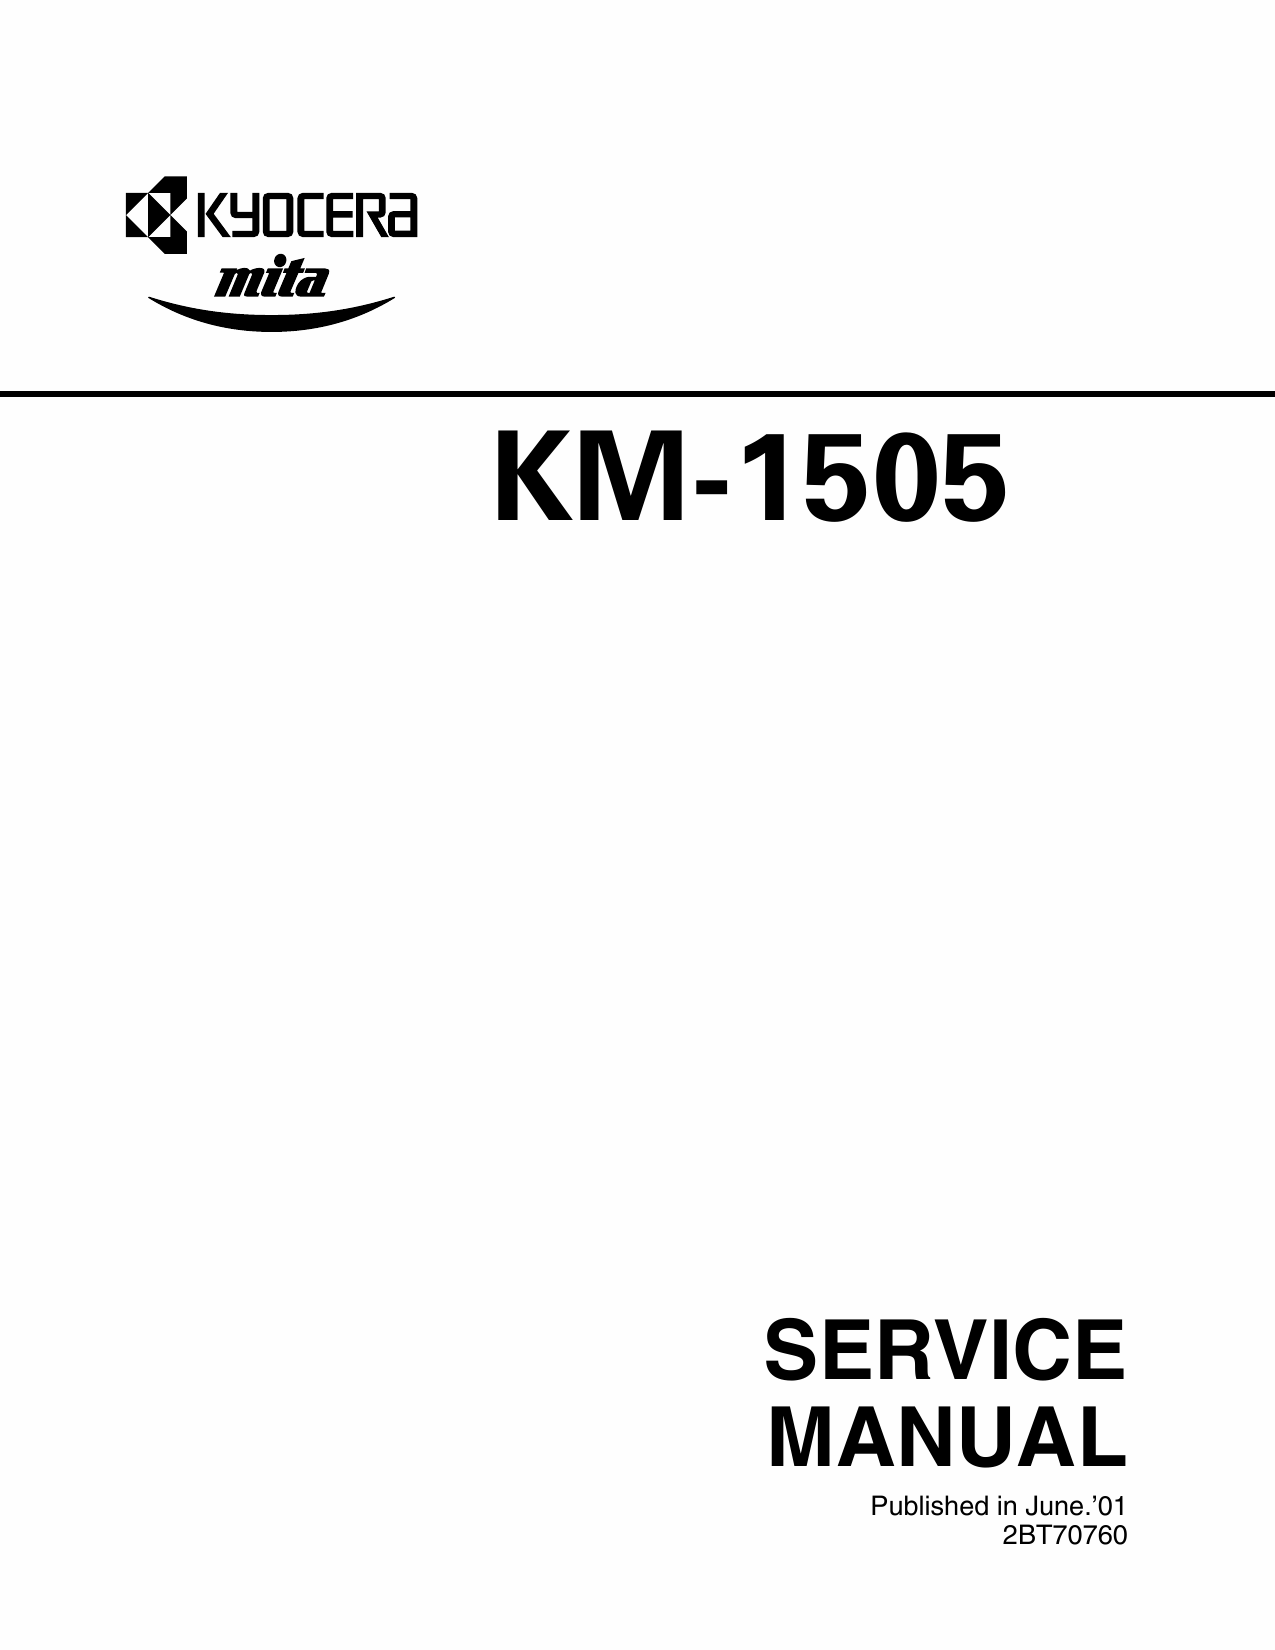 KYOCERA Copier KM-1505 Parts and Service Manual-1